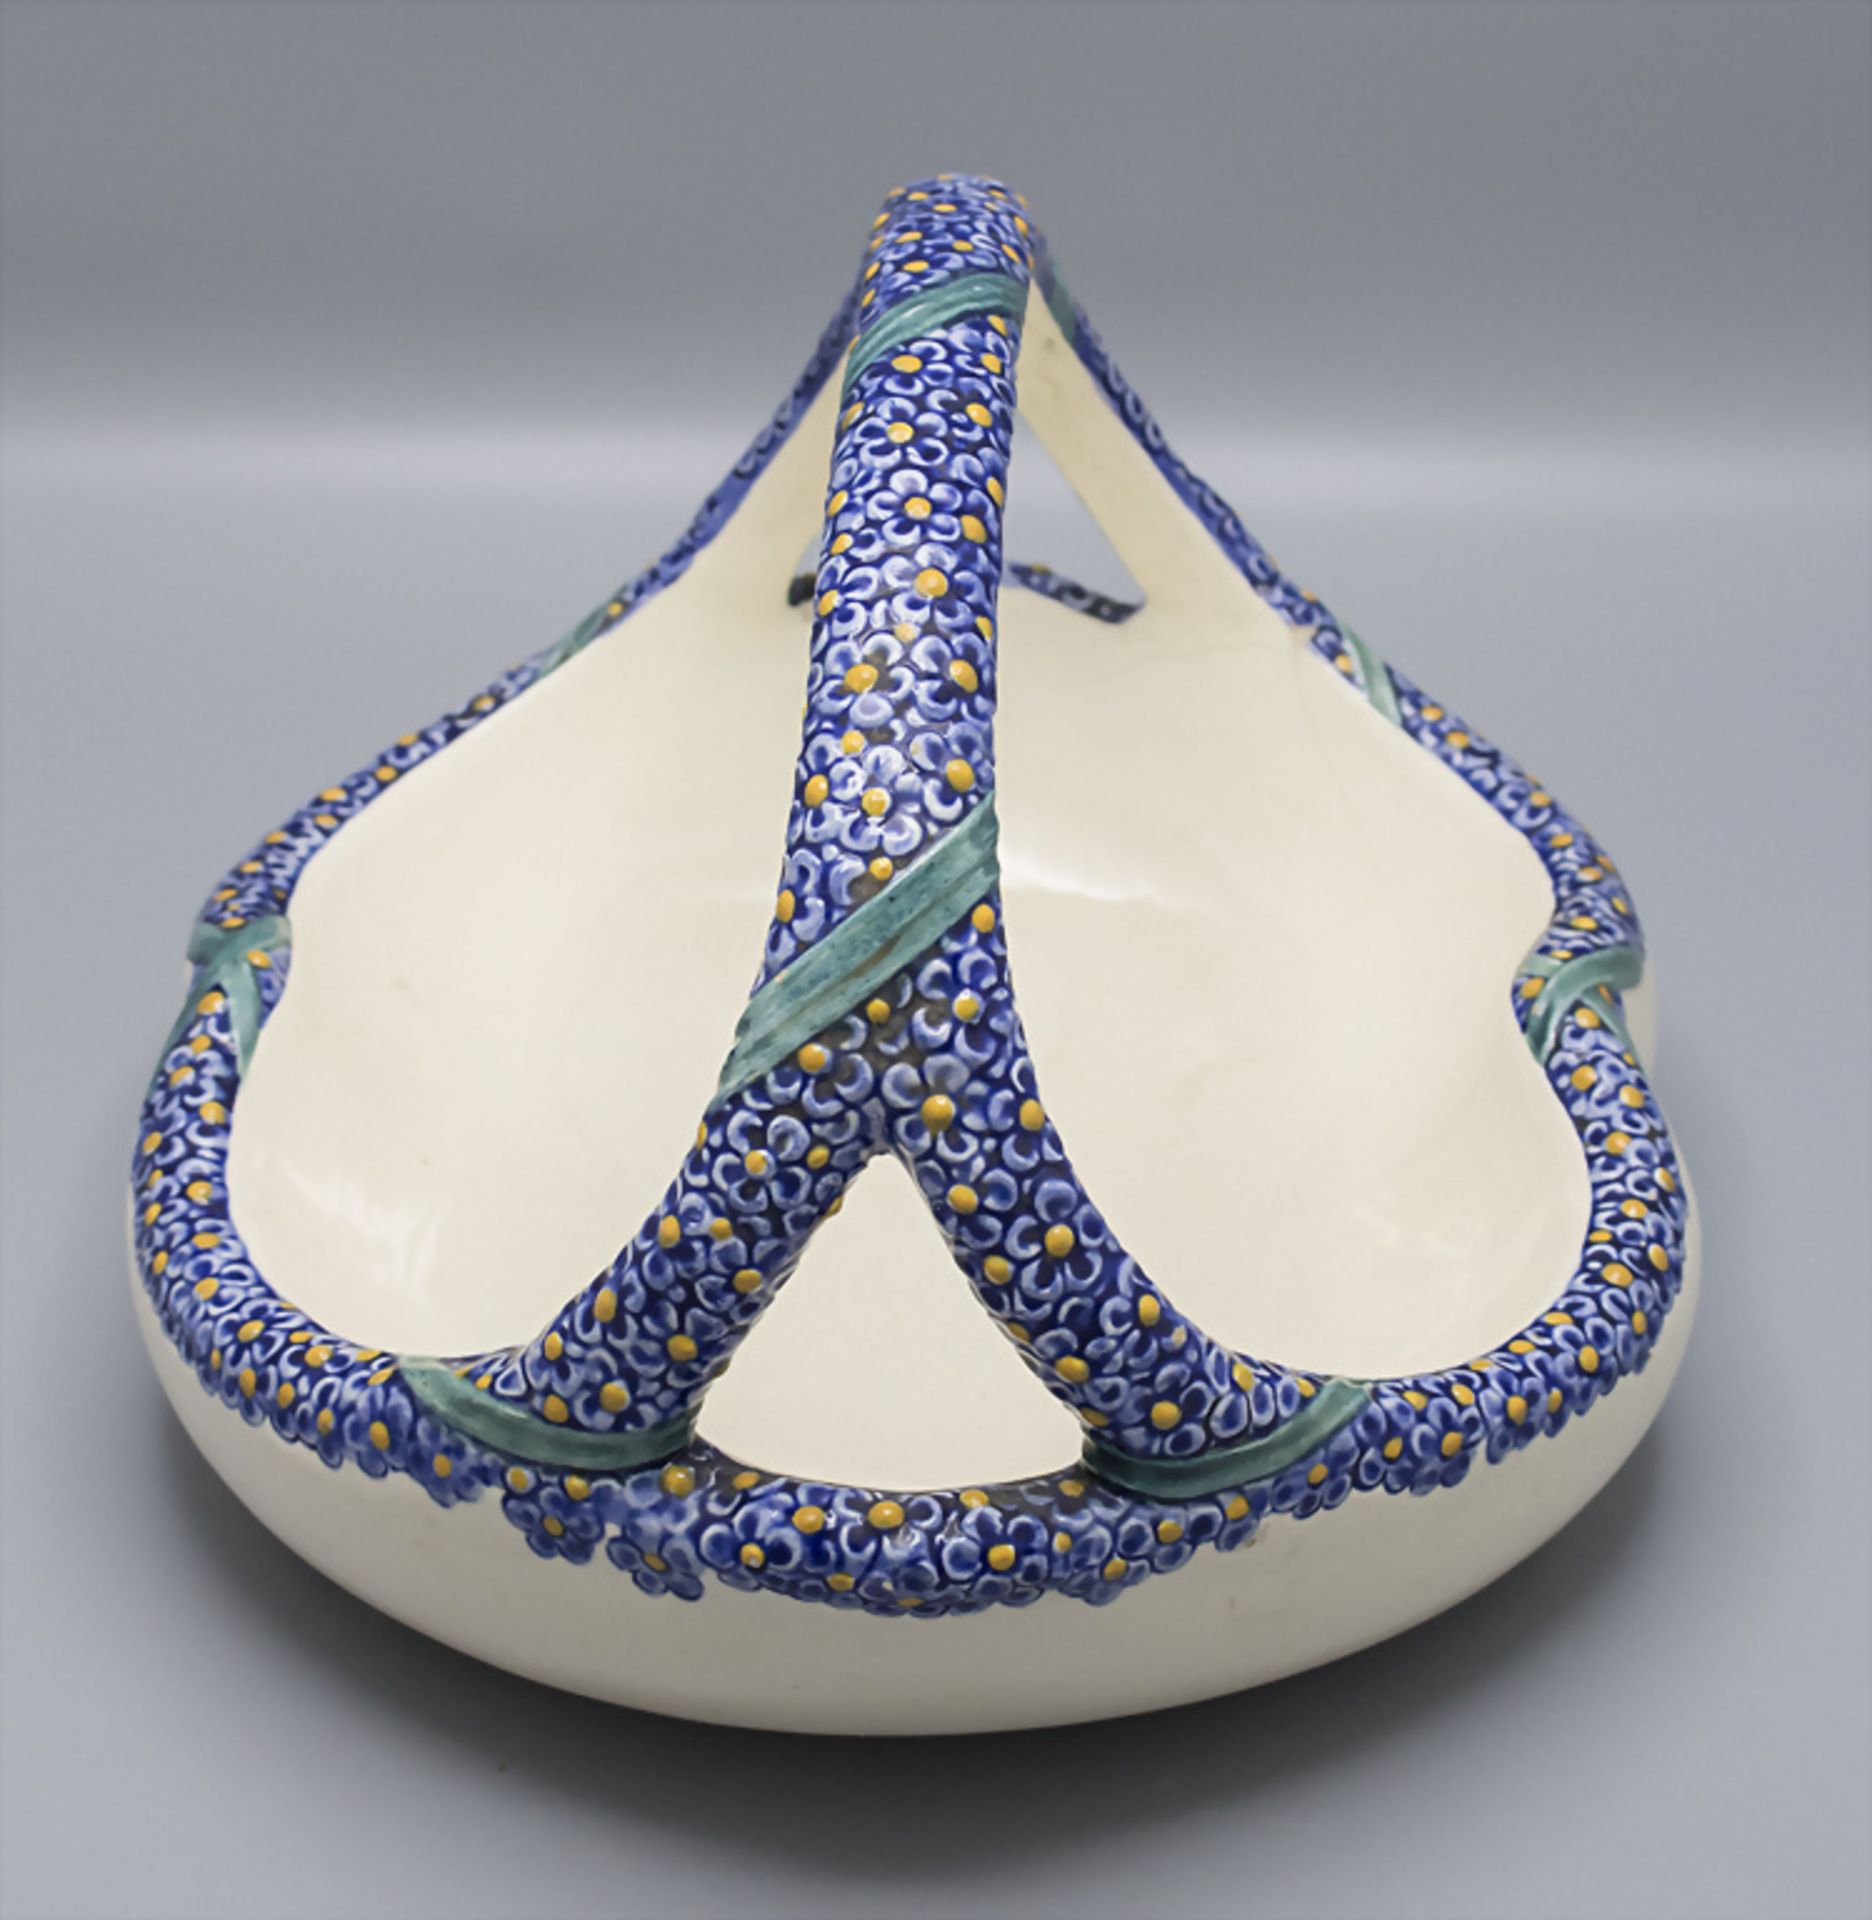 Keramikkorb / A ceramic basket, Karlsruher Majolika, um 1900 - Bild 2 aus 3